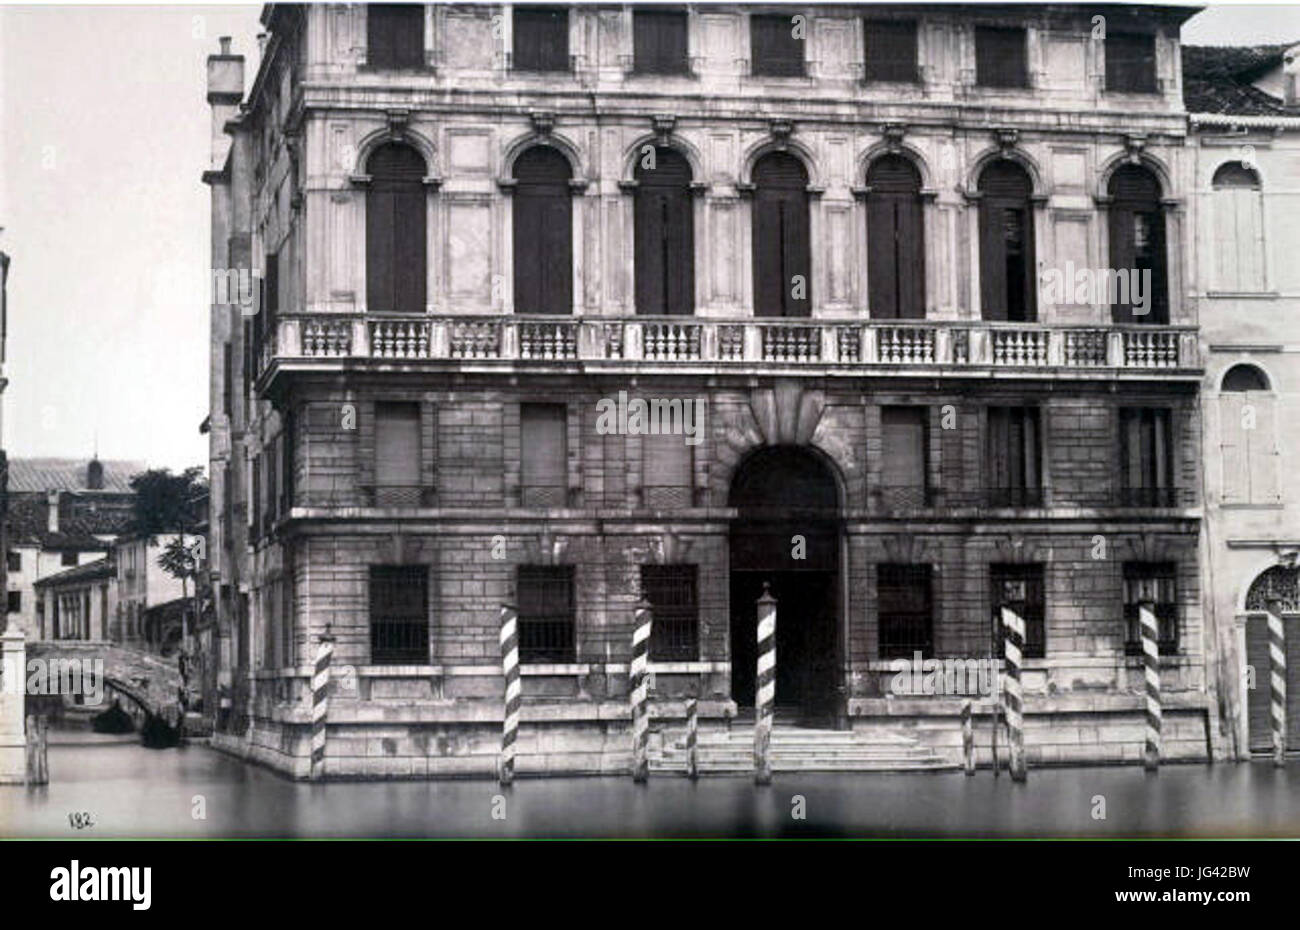 Carlo Naya 281816-188 9 - n. 182 - Venezia - Palazzo Grimani San Polo - ca. 1875 Foto de stock